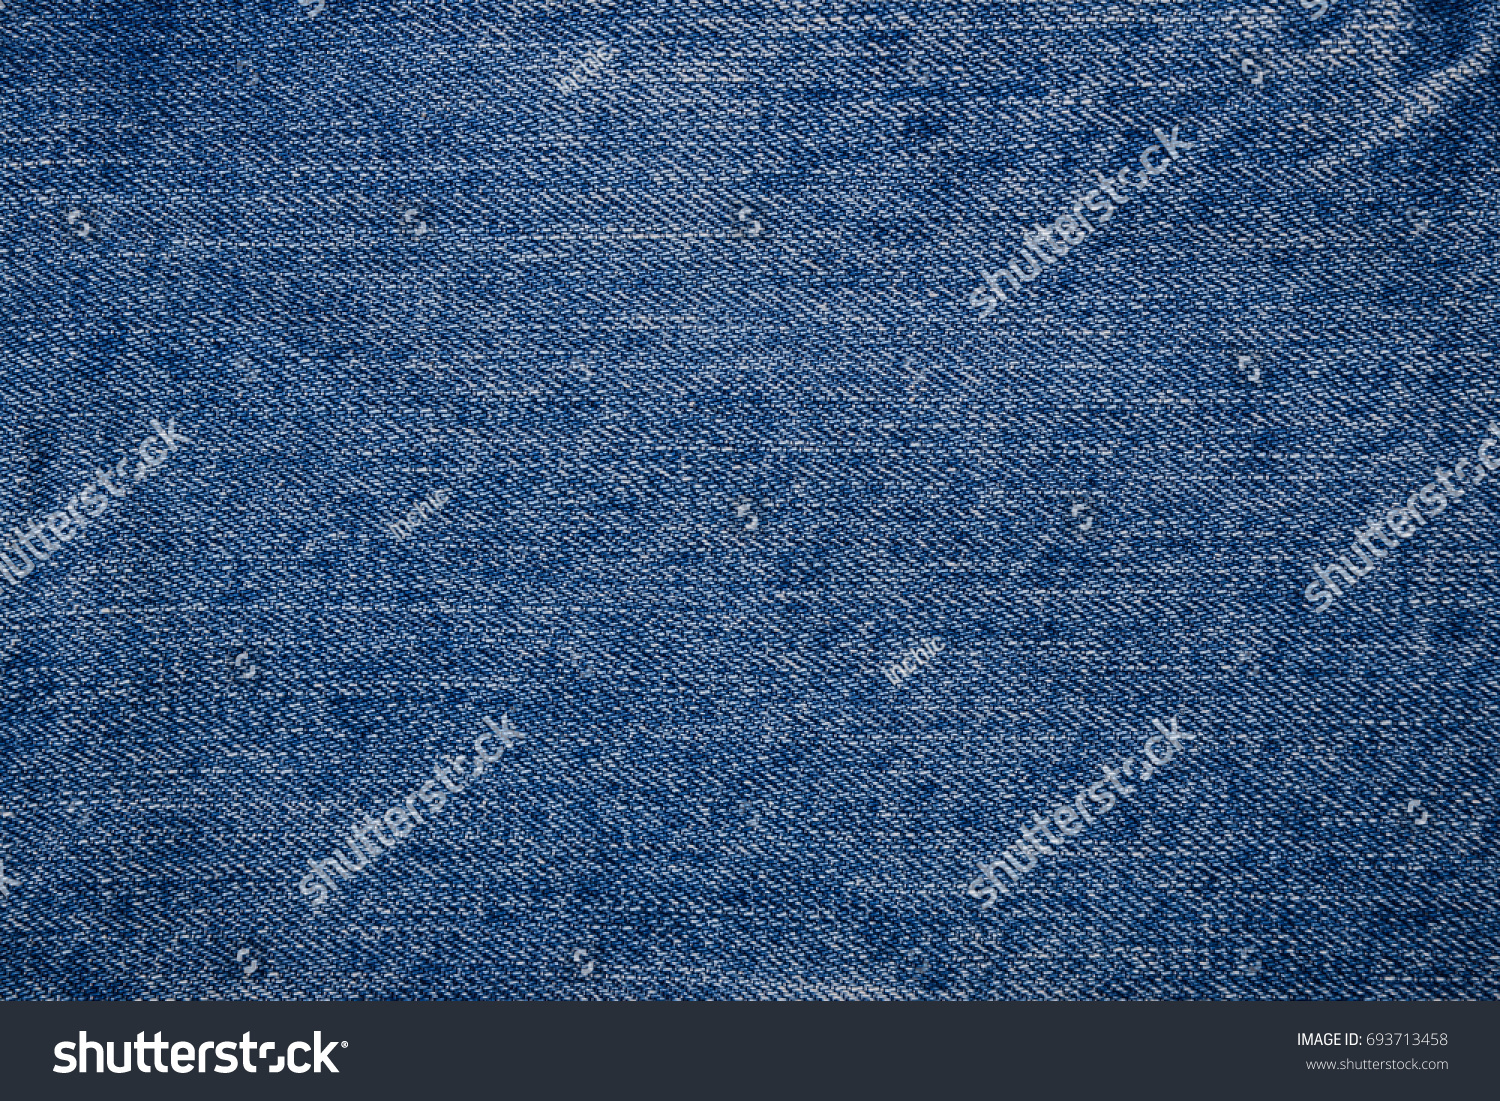 Blue Jean Fabric Background Stock Photo 693713458 | Shutterstock